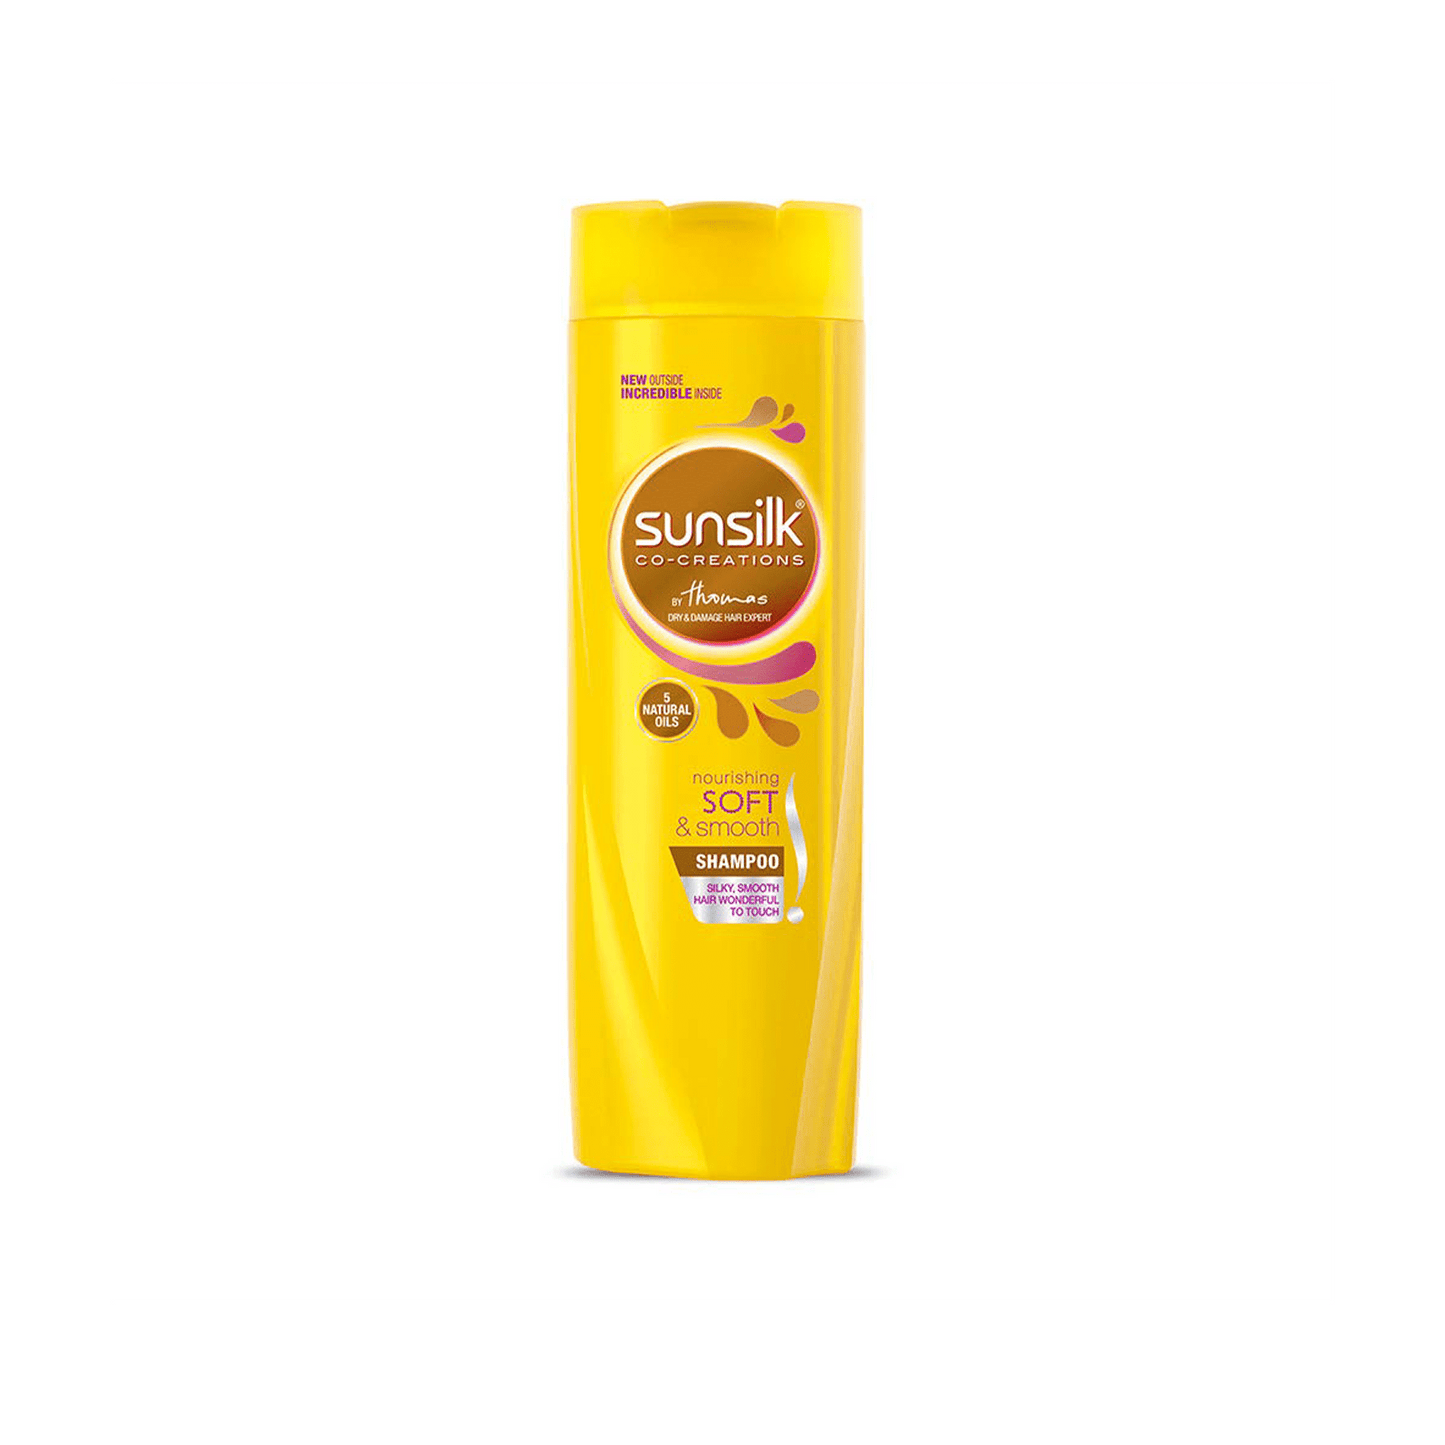 Sunsilk Soft & Smooth Shampoo.